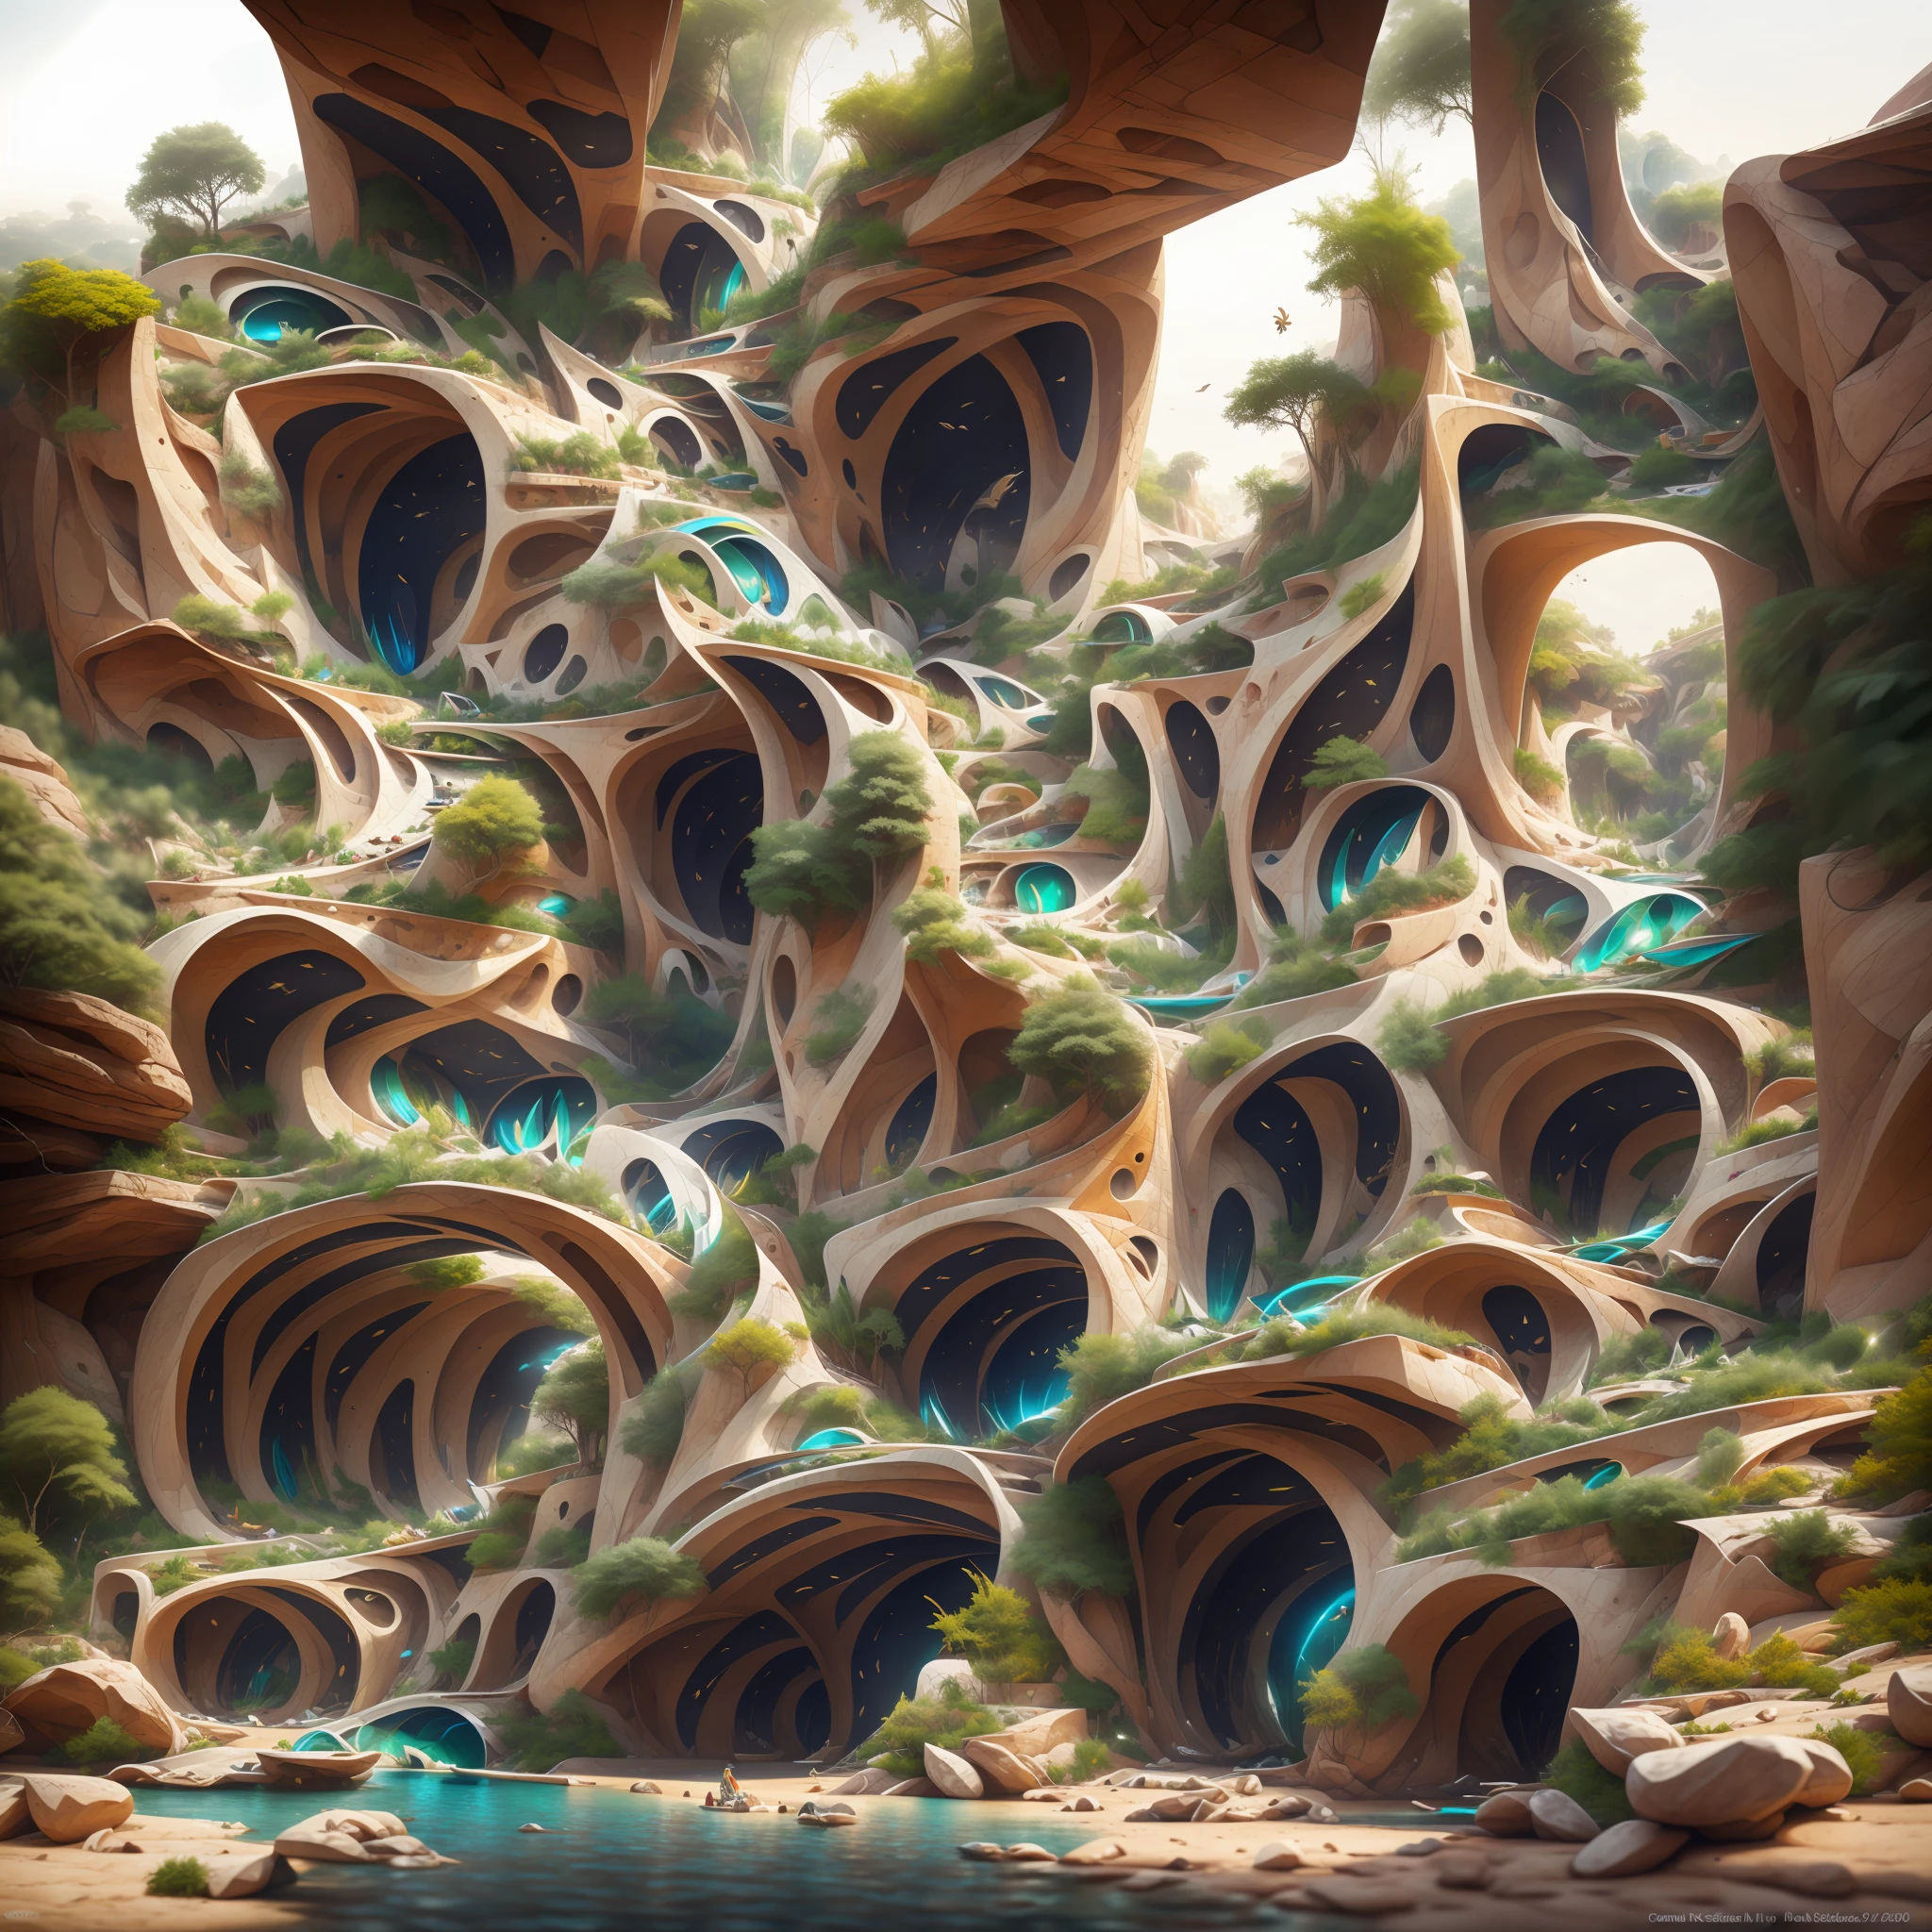 :an awesome sunny cheerful day environment concept art of Futuristic design of cave architecture interiors concept art on grand Canyon caves 自然建築, 成比例的,詳細的, 洞穴建築自然與未來建築在熱帶雨林叢林懸崖上的巨大瀑布相遇,暮光之光, 大自然與牡羊座莫羅斯風格的現代建築相遇, 雷姆·庫哈斯,丹尼爾·裡伯斯金德, 讓·努維爾, 保羅·索萊裡,伊東豐雄和菲利普·約翰遜的乾筆繪畫風格 ,明暗對比村,懸崖邊住宅區, 混合發展,自然建築,鮮豔的色彩,高層建築樓梯, 陽台, 充滿玻璃帷幕牆,由岩石雕刻而成, 傑作, 成比例的, 詳細的, ArtStation 上的熱門話題, 美麗的燈光, 實際的, 錯綜複雜